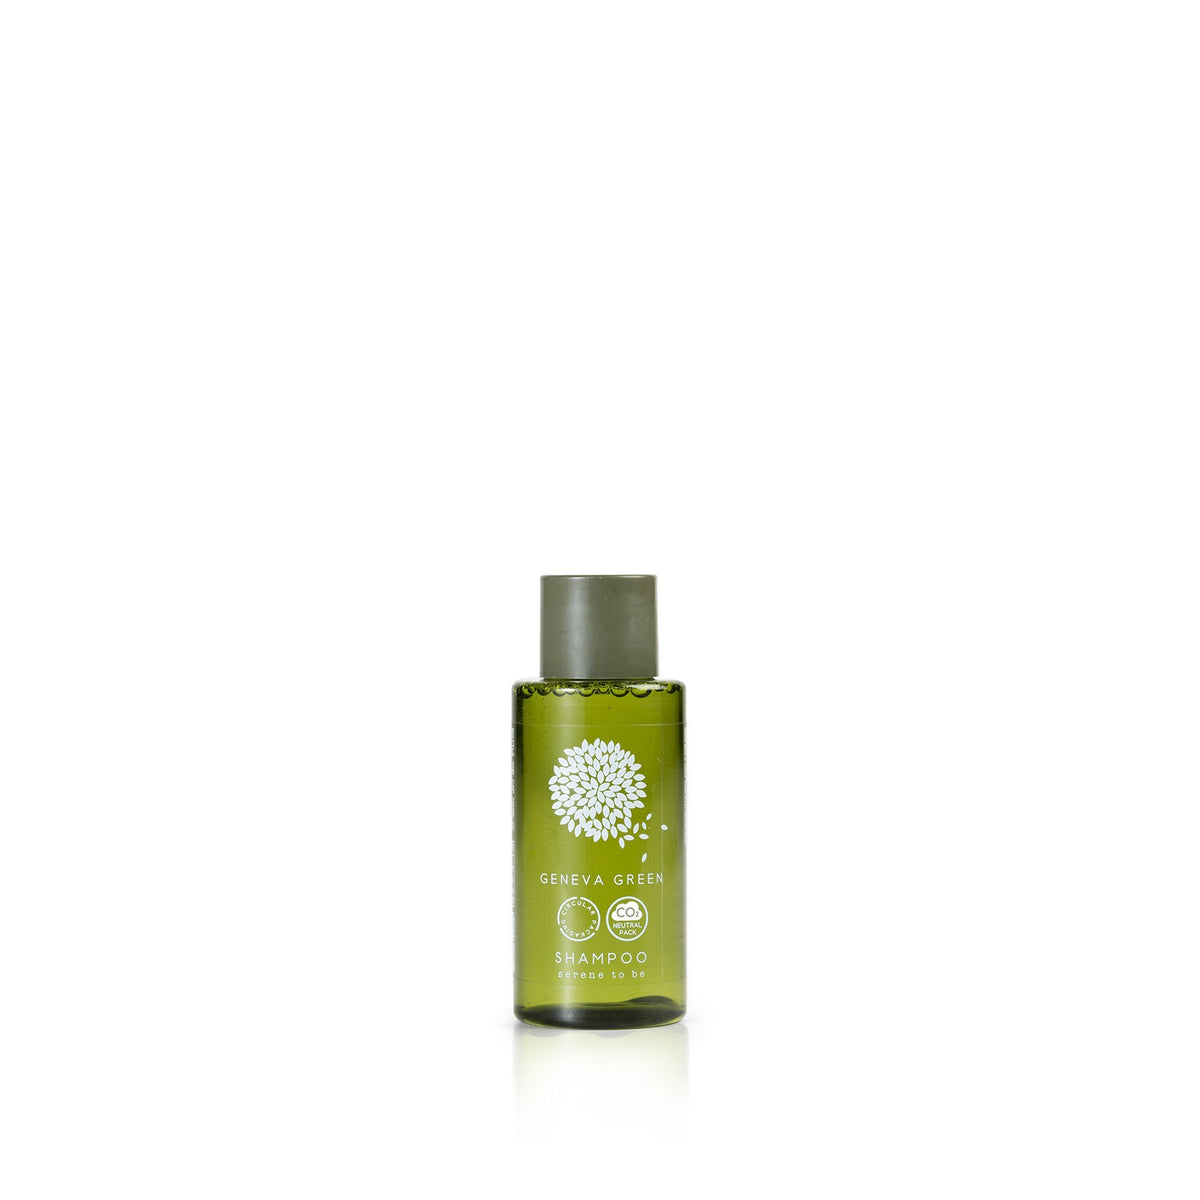 Geneva Green Shampoo (1.35 Fluid Ounce) 